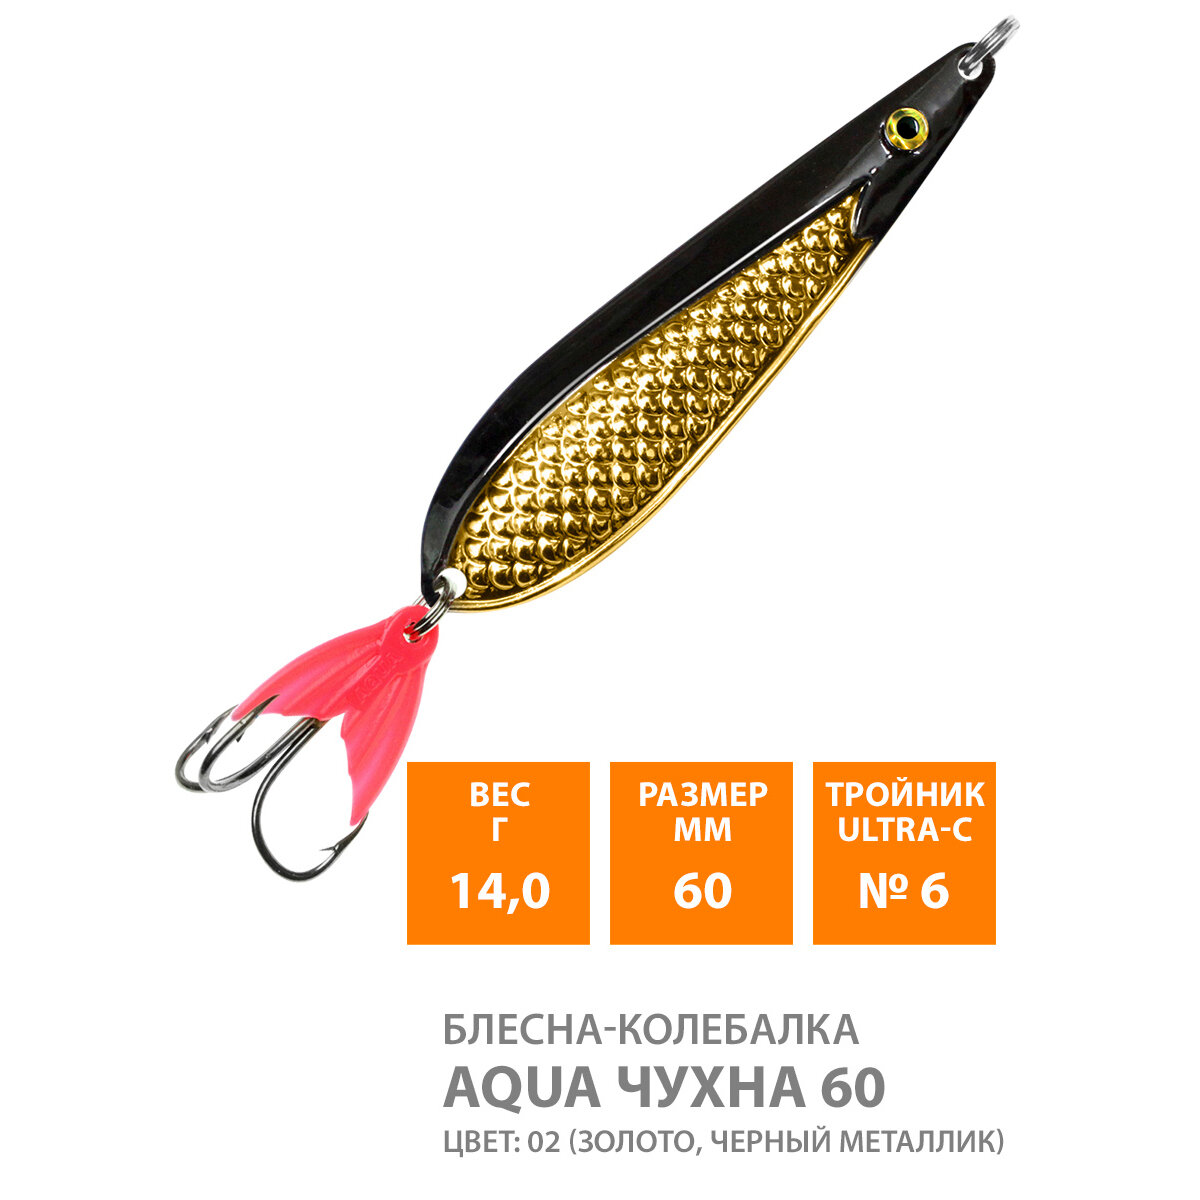 Блесна колебалка для рыбалки AQUA Чухна 60mm 14g цвет 02